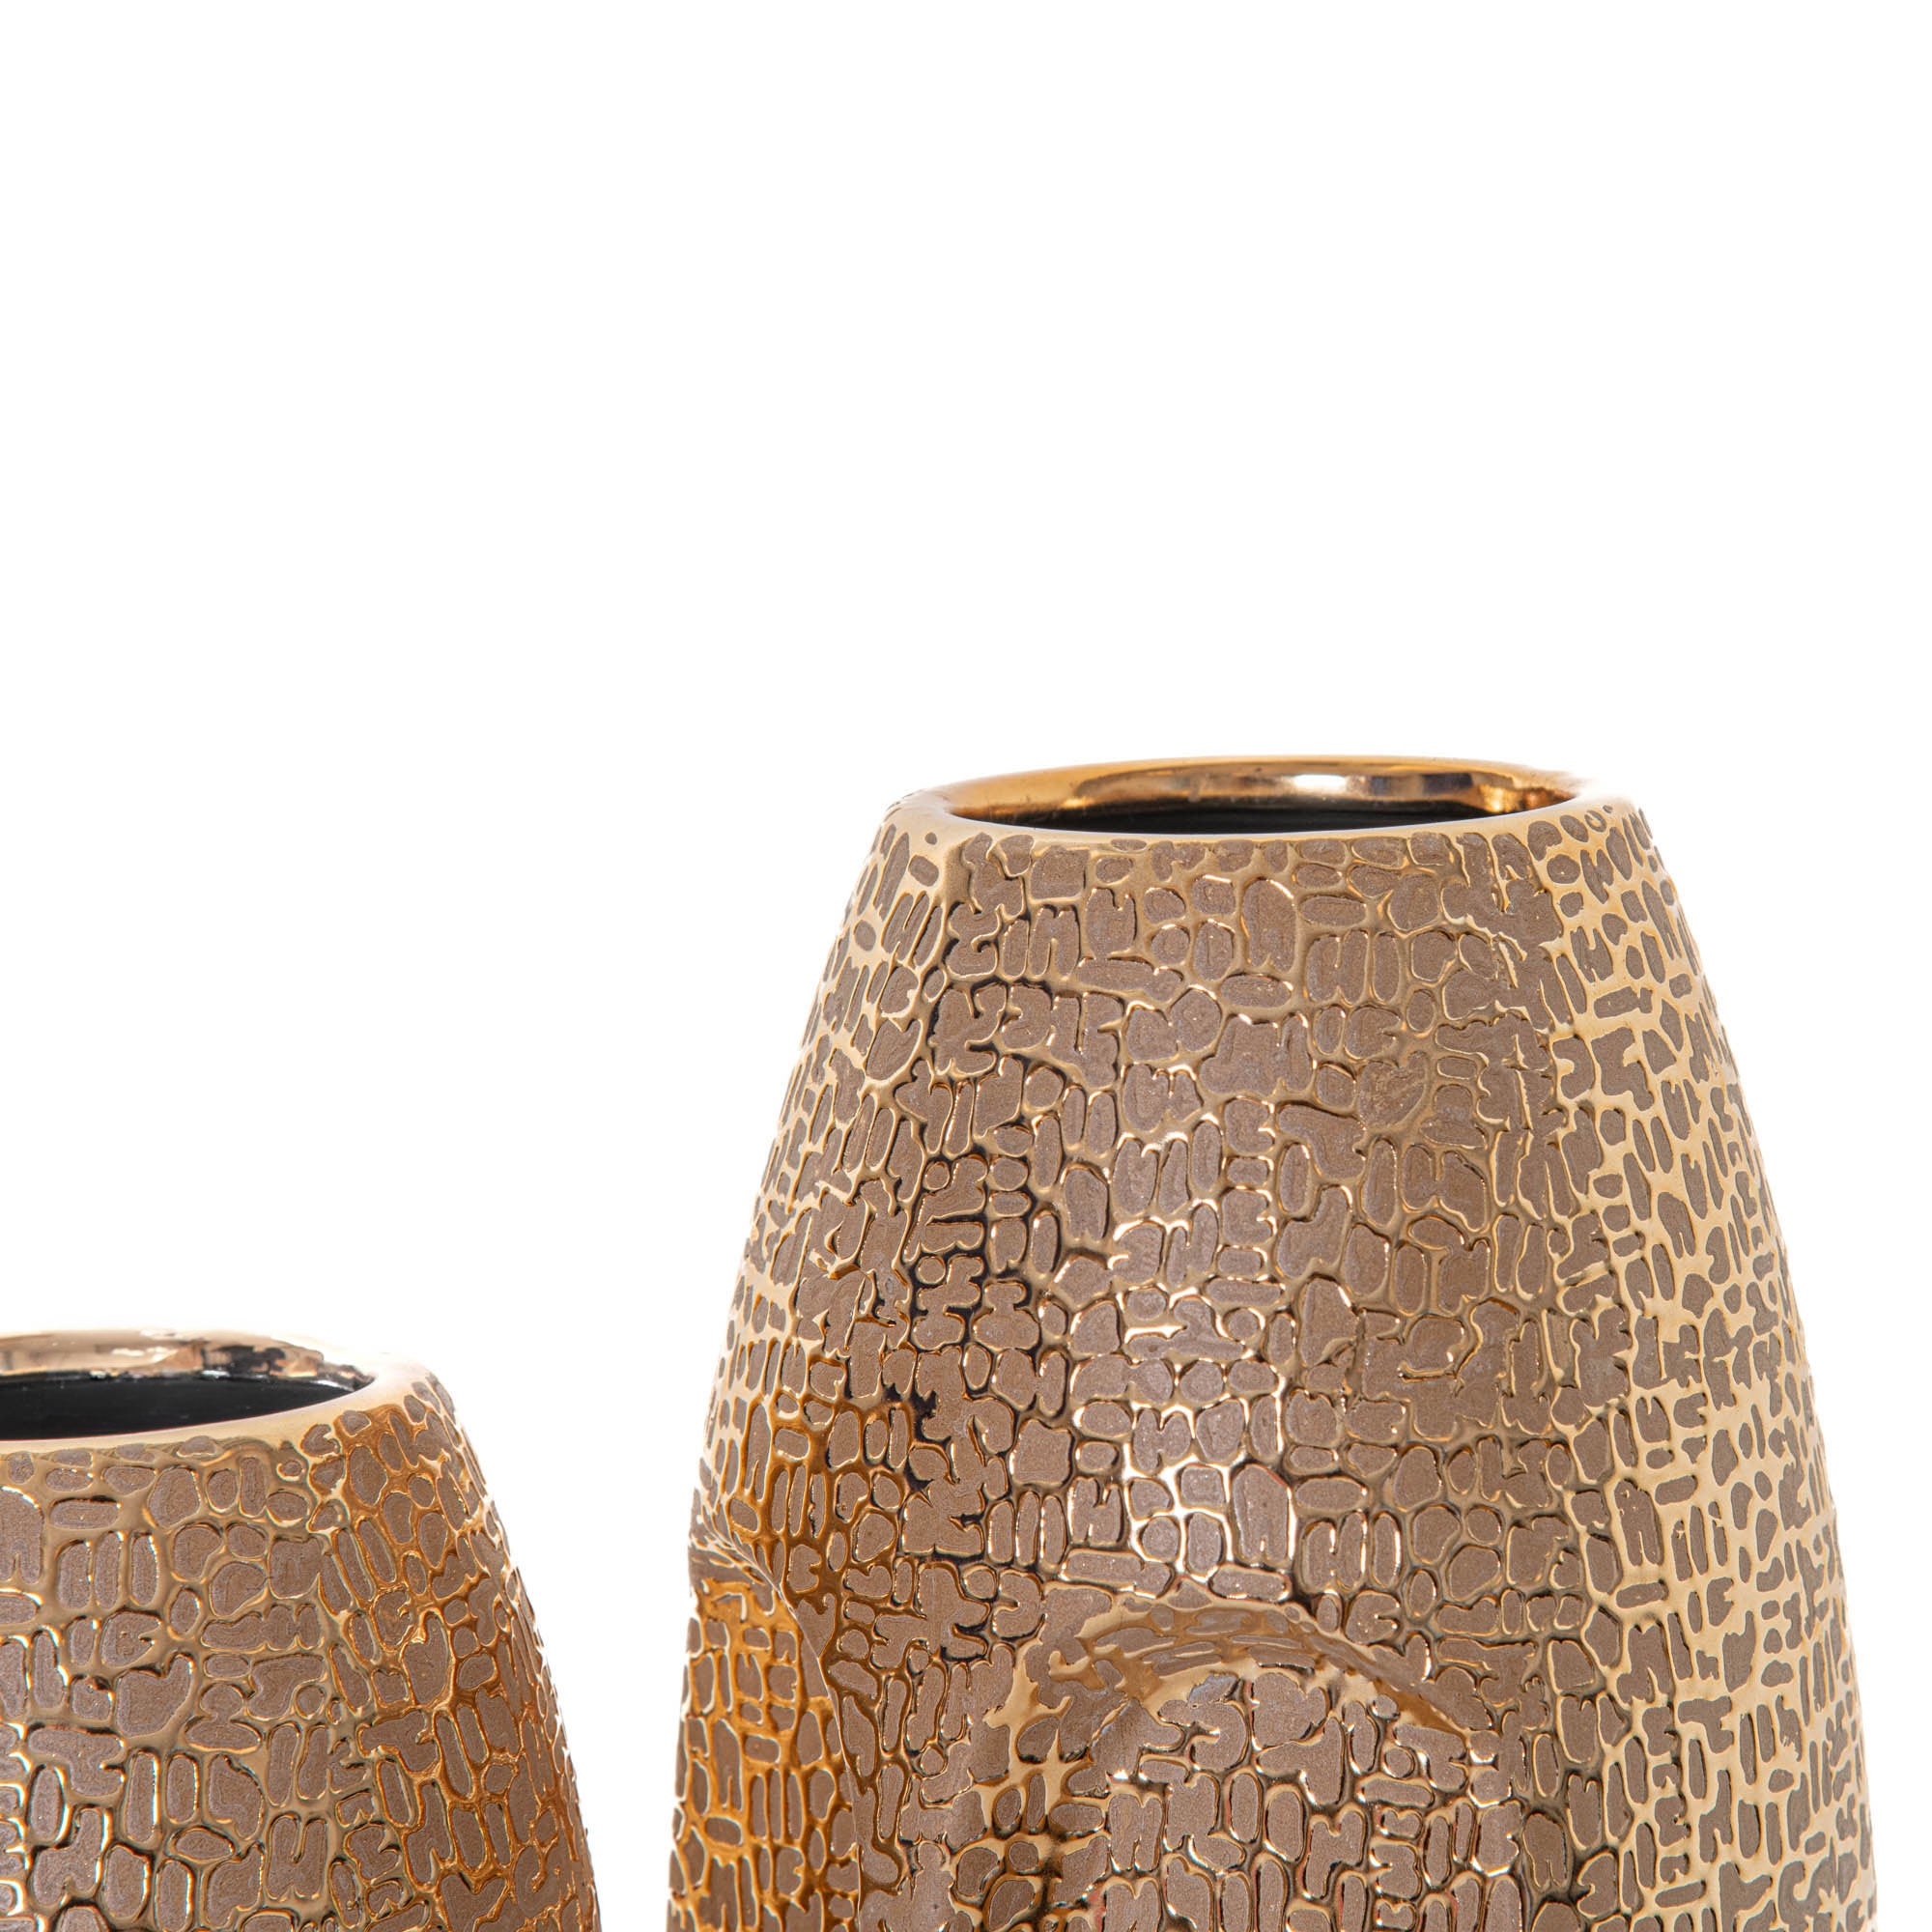 Rapa Nui Gold Textured Ceramic Face Vase Large 38cm(BO)